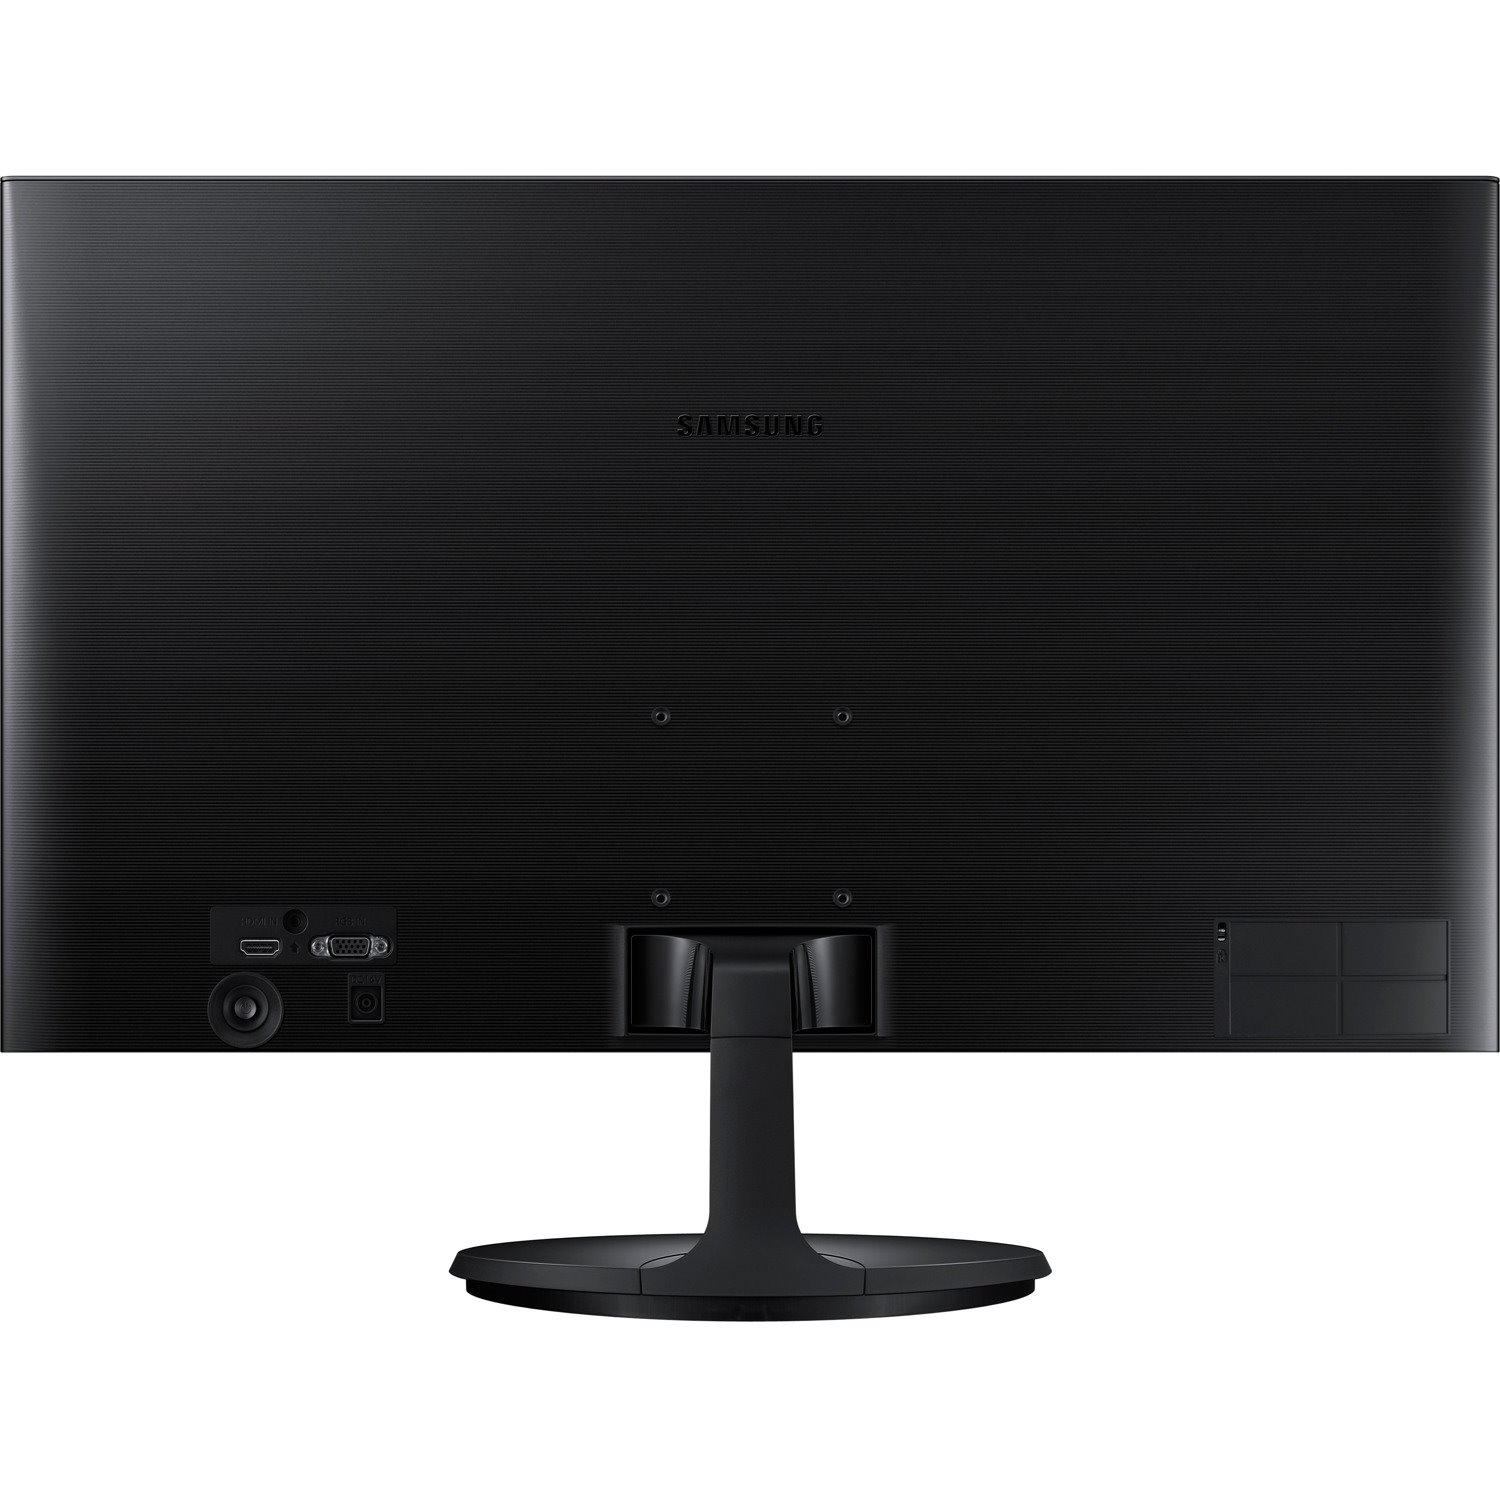 Samsung S22F350FHE 22" Class Full HD LCD Monitor - 16:9 - High Glossy Black